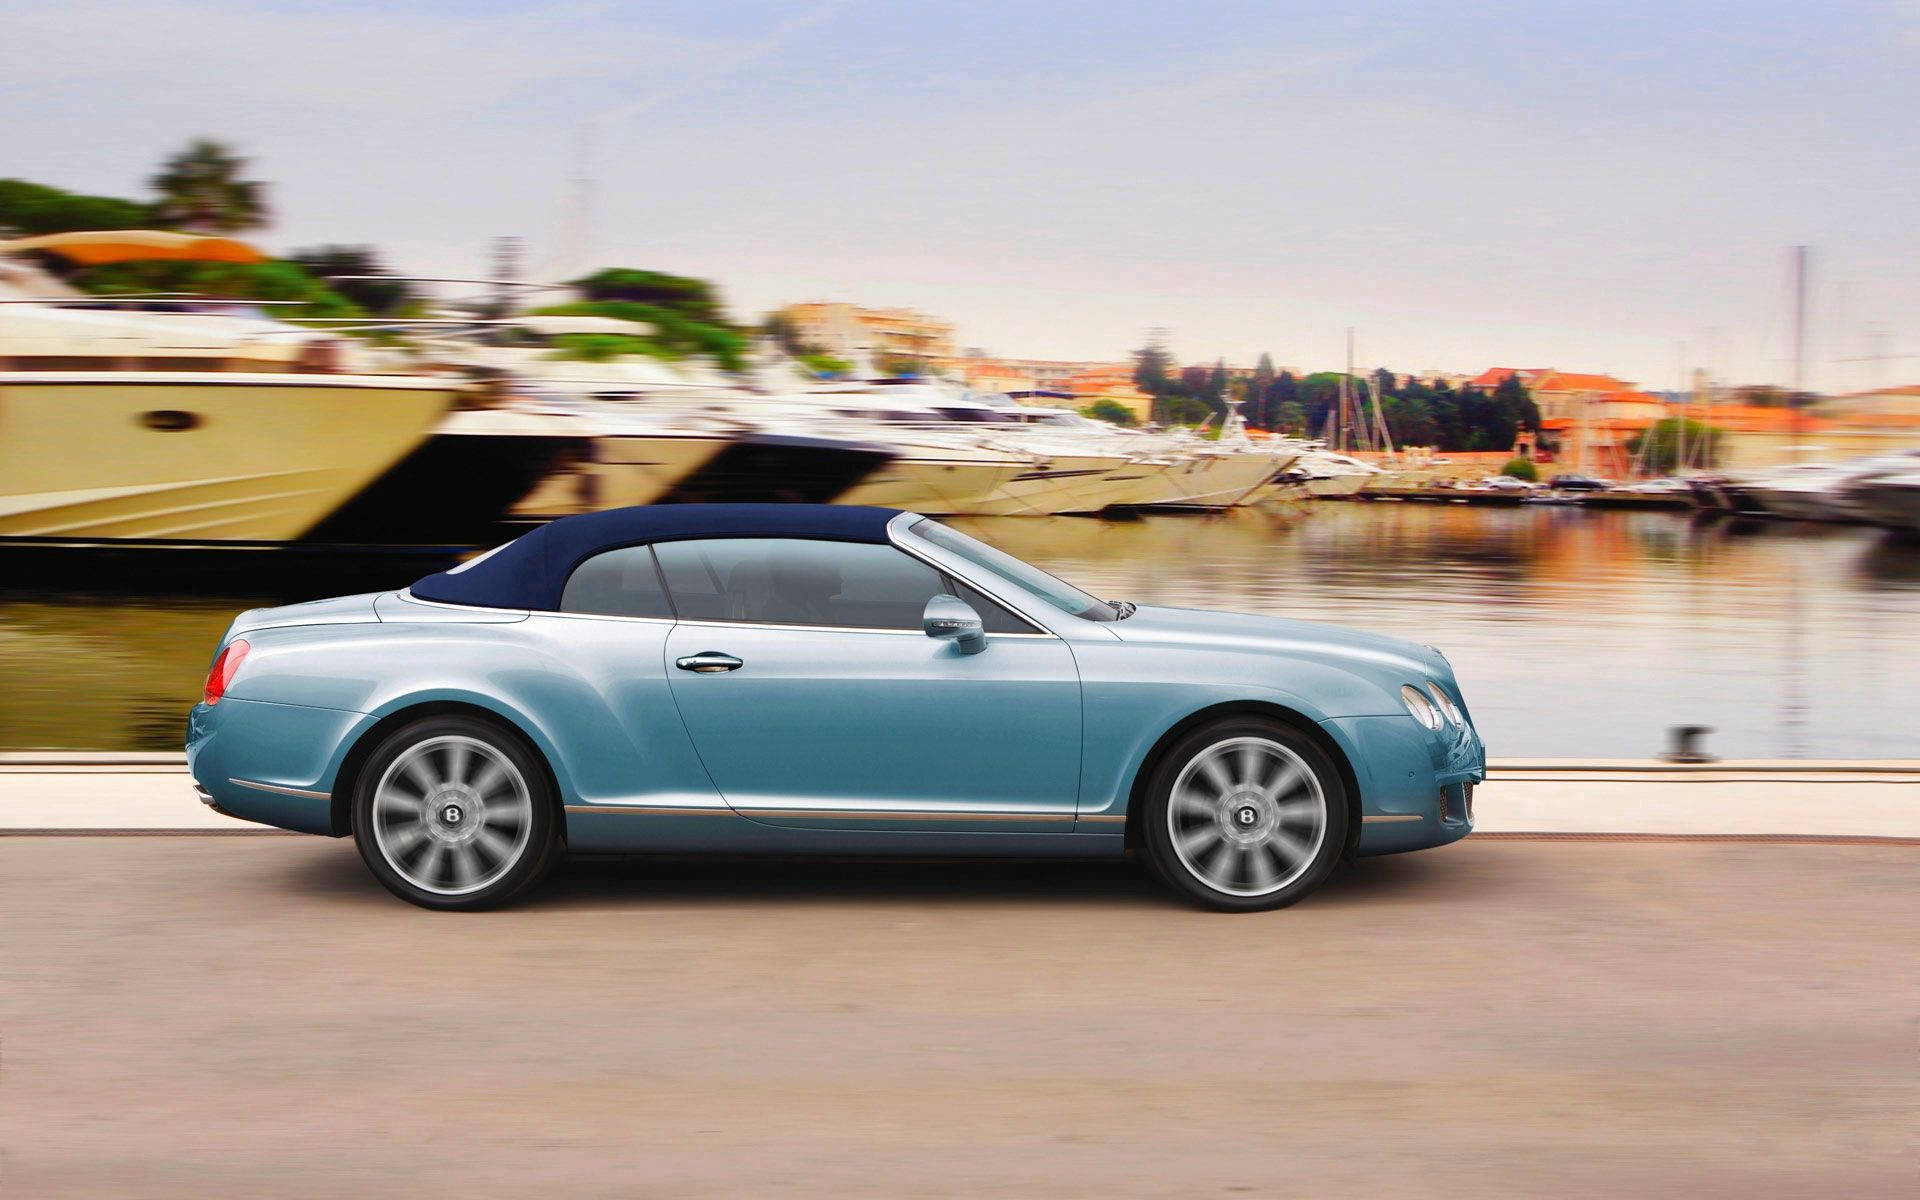 Top 999+ Bentley Wallpaper Full HD, 4K✅Free to Use